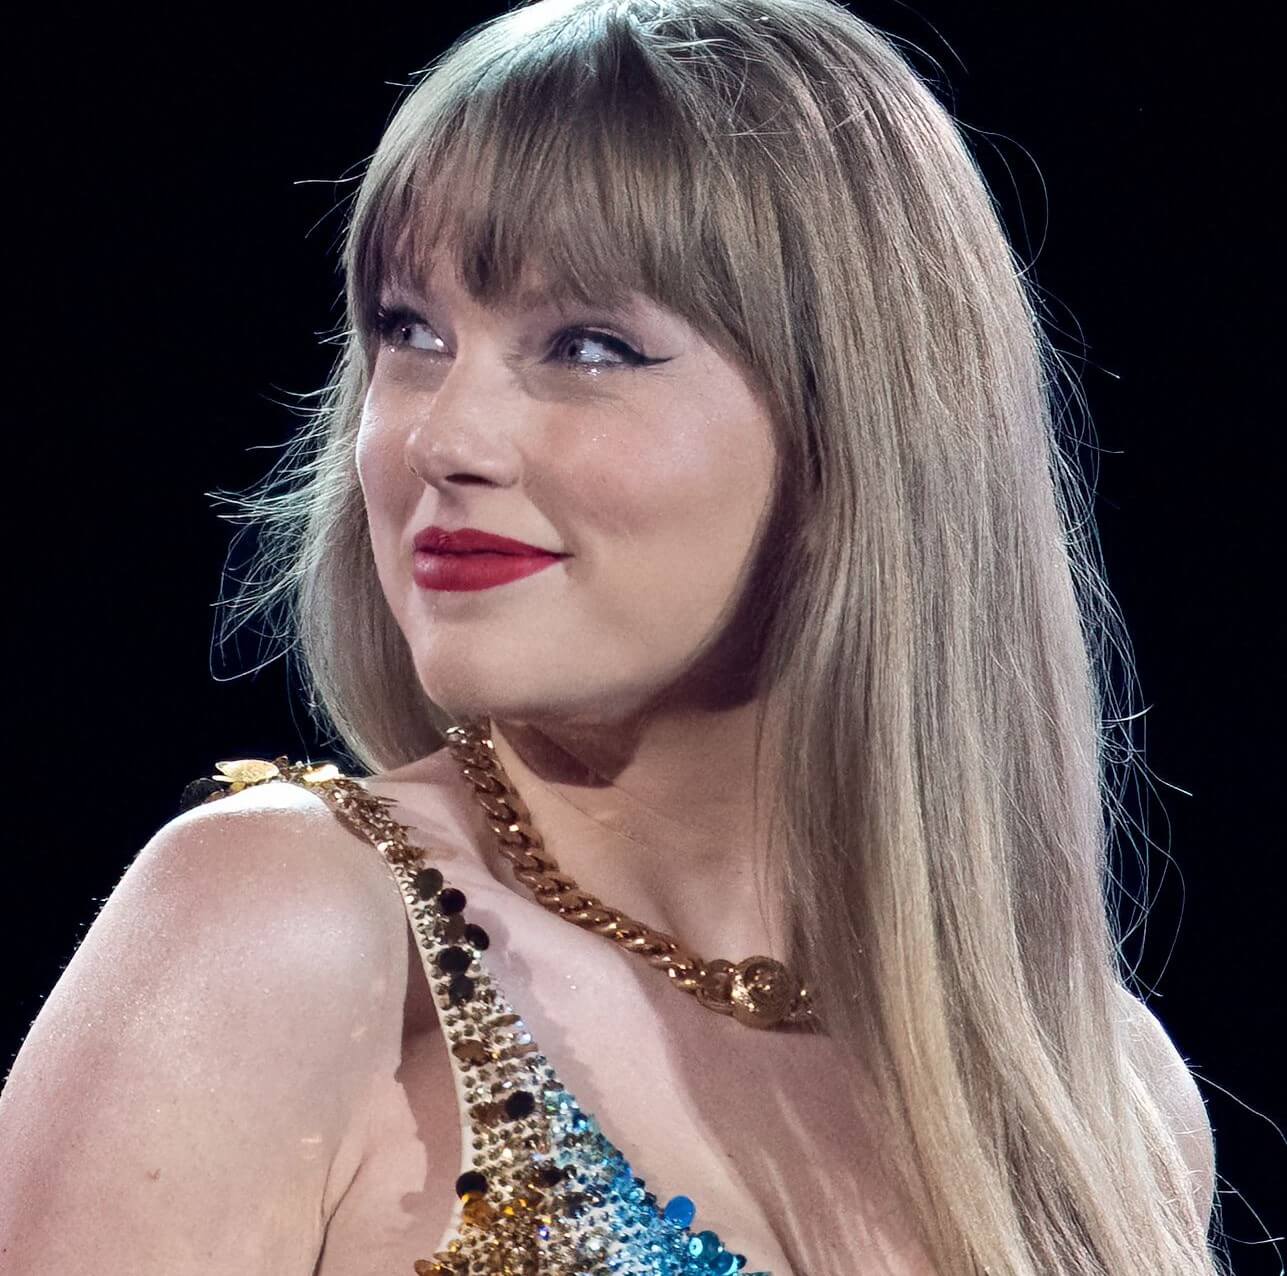 "Love Story" singer Taylor Swift smiling